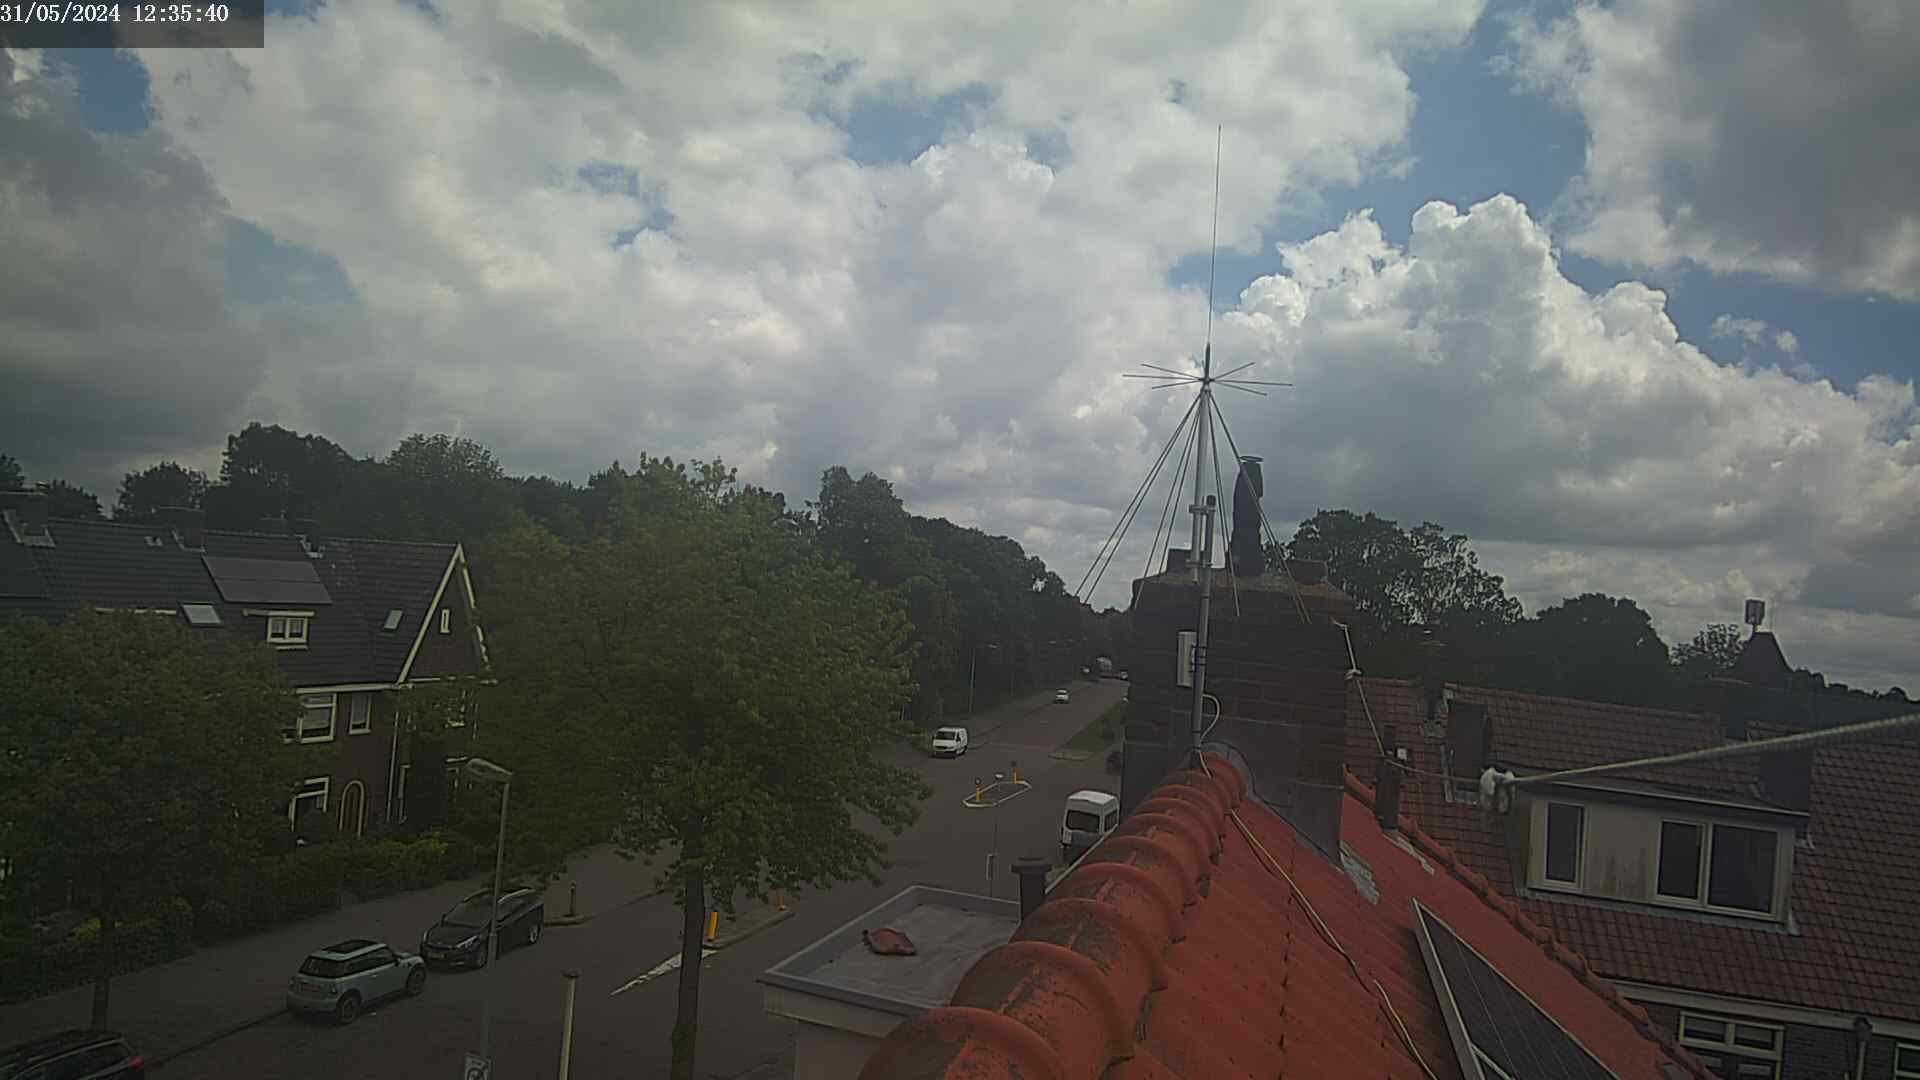 Haarlem Dom. 13:35